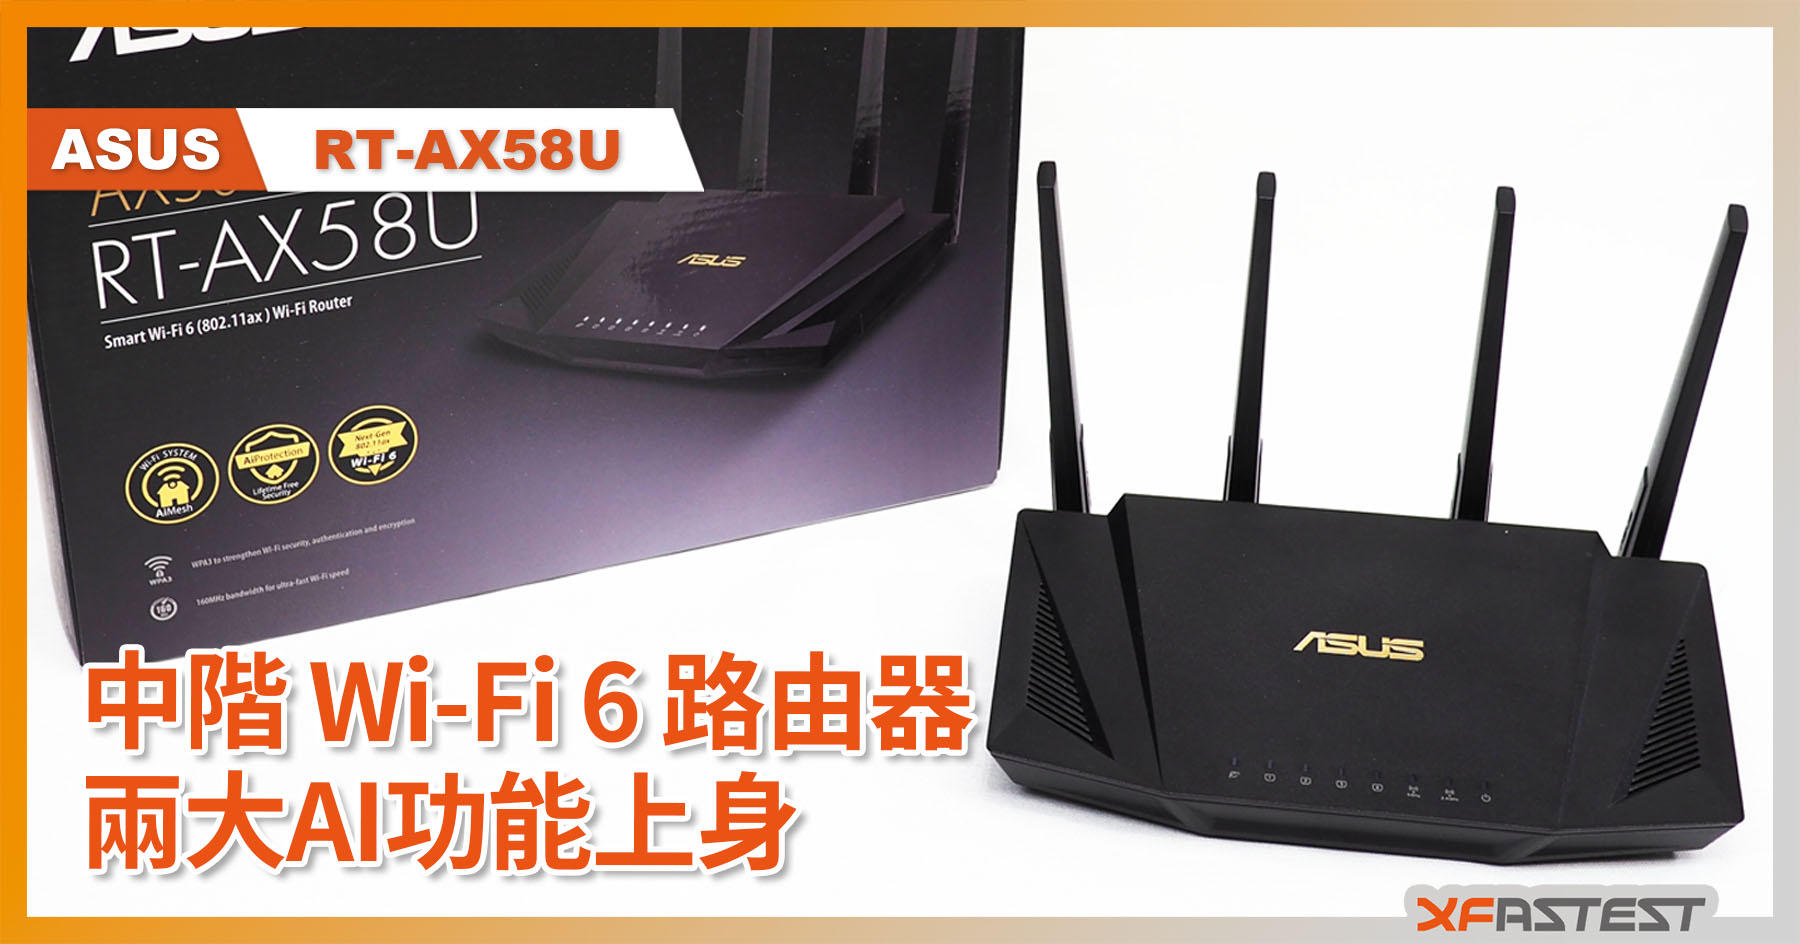 Søgemaskine markedsføring Recept orientering XF 開箱] 加入兩大Ai 功能ASUS RT-AX58U 中階Wi-Fi 6 Router - XFastest Hong Kong